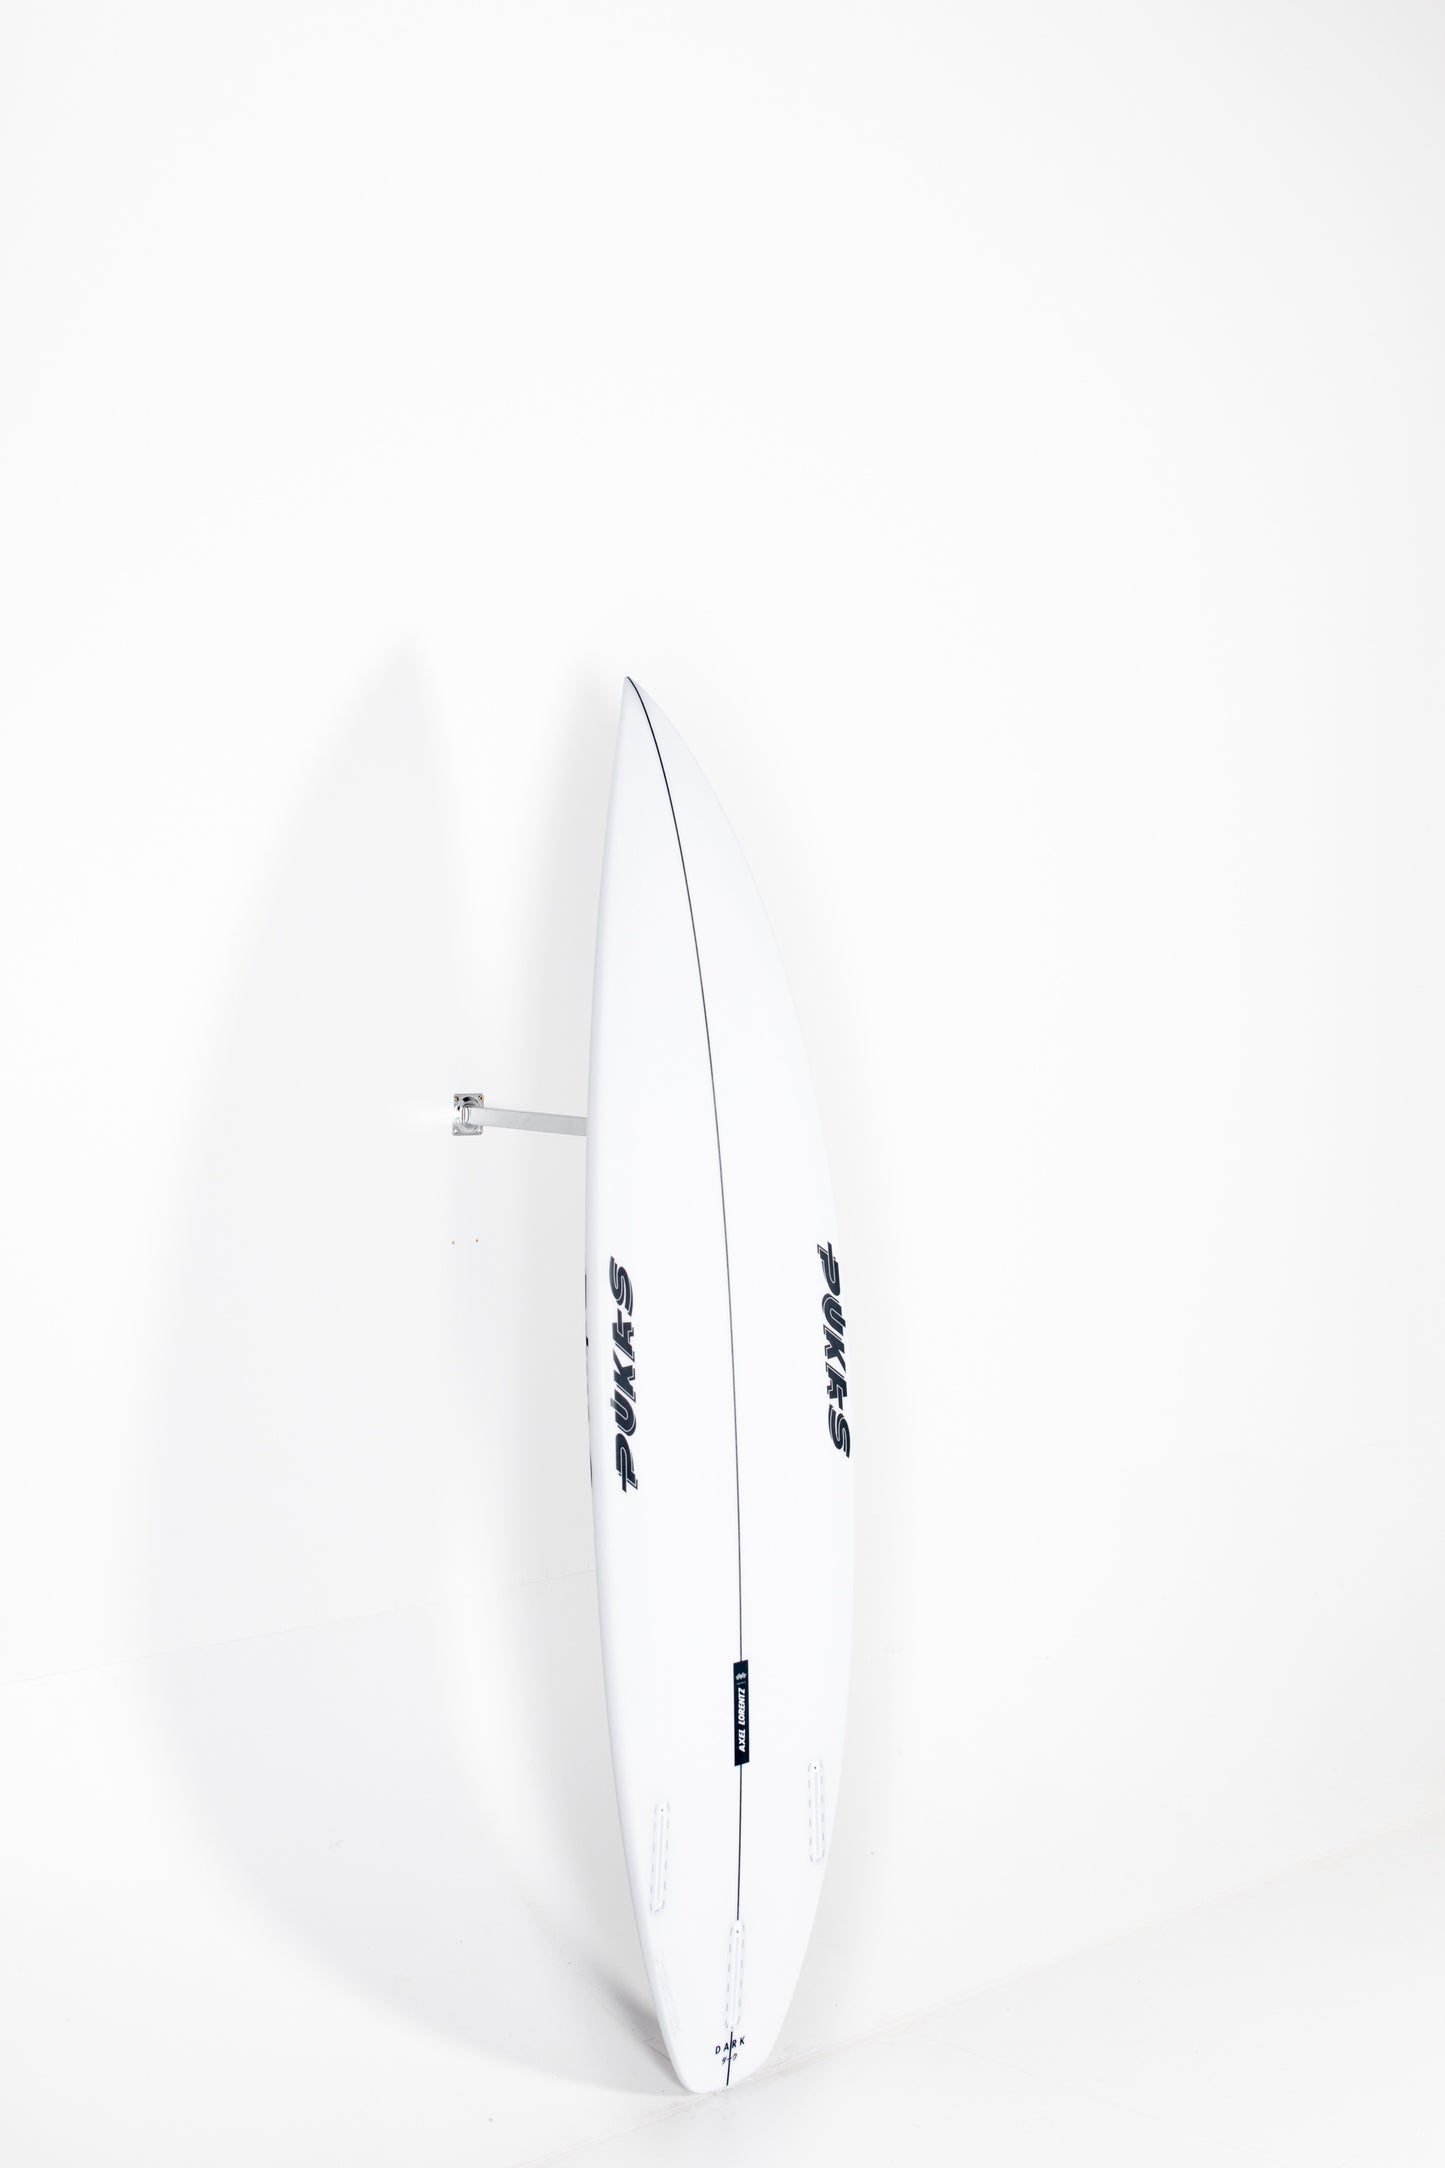 
                  
                    Pukas Surf Shop - Pukas Surfboard - DARK by Axel Lorentz - 6’2” x 19,75 x 2,43 - 31,61L - AX06156
                  
                